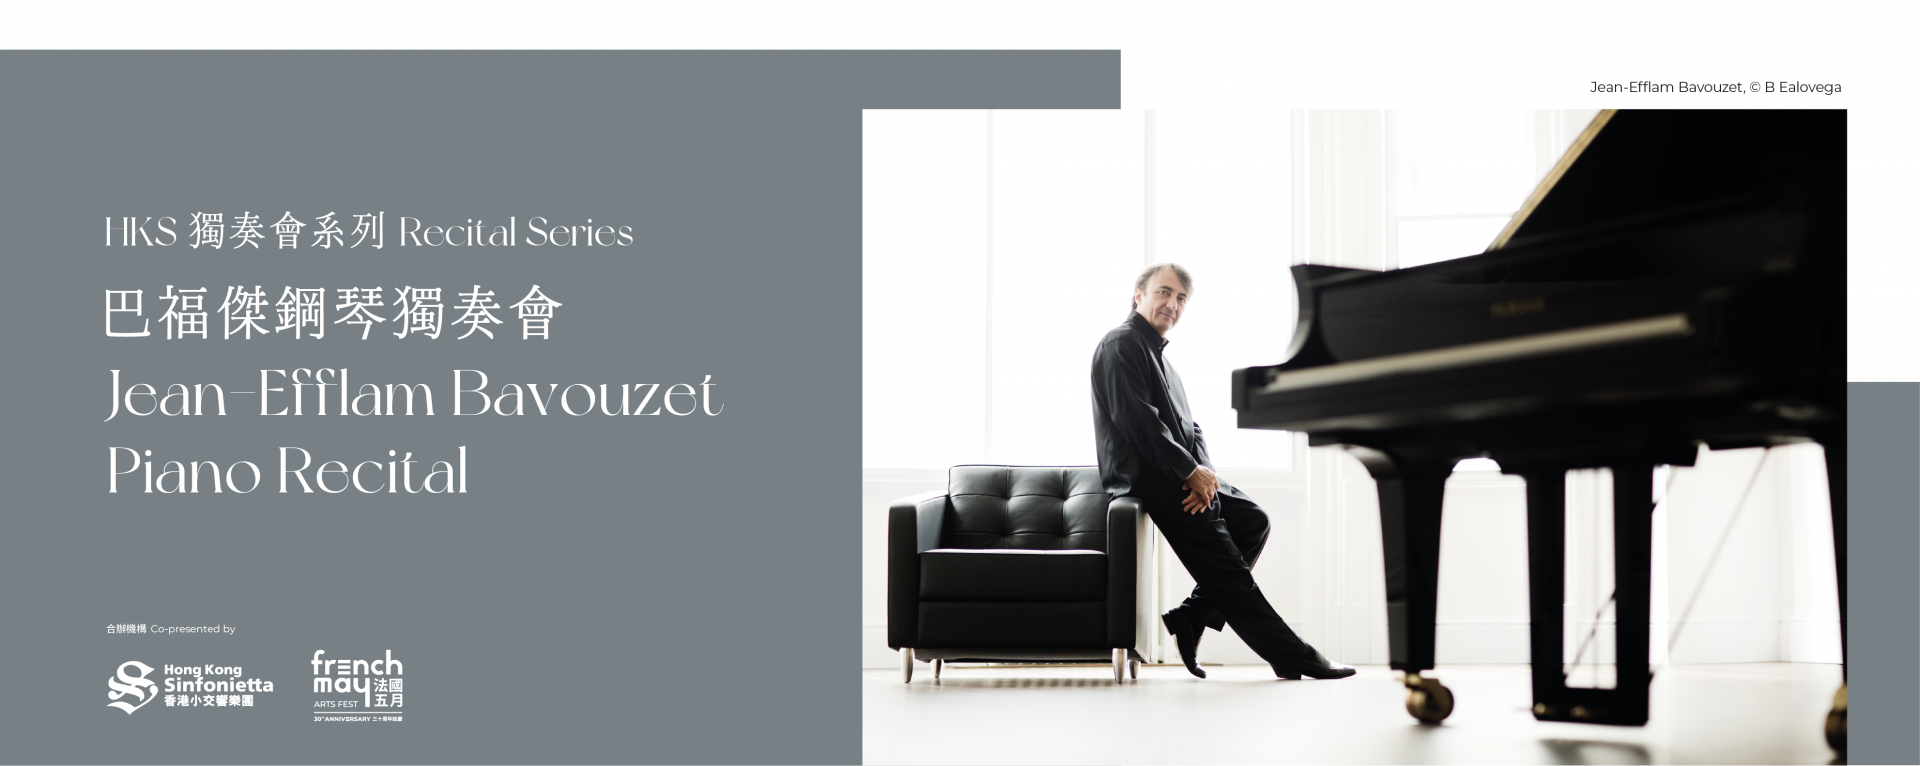 HKS Recital Series Jean-Efflam Bavouzet Piano Recital